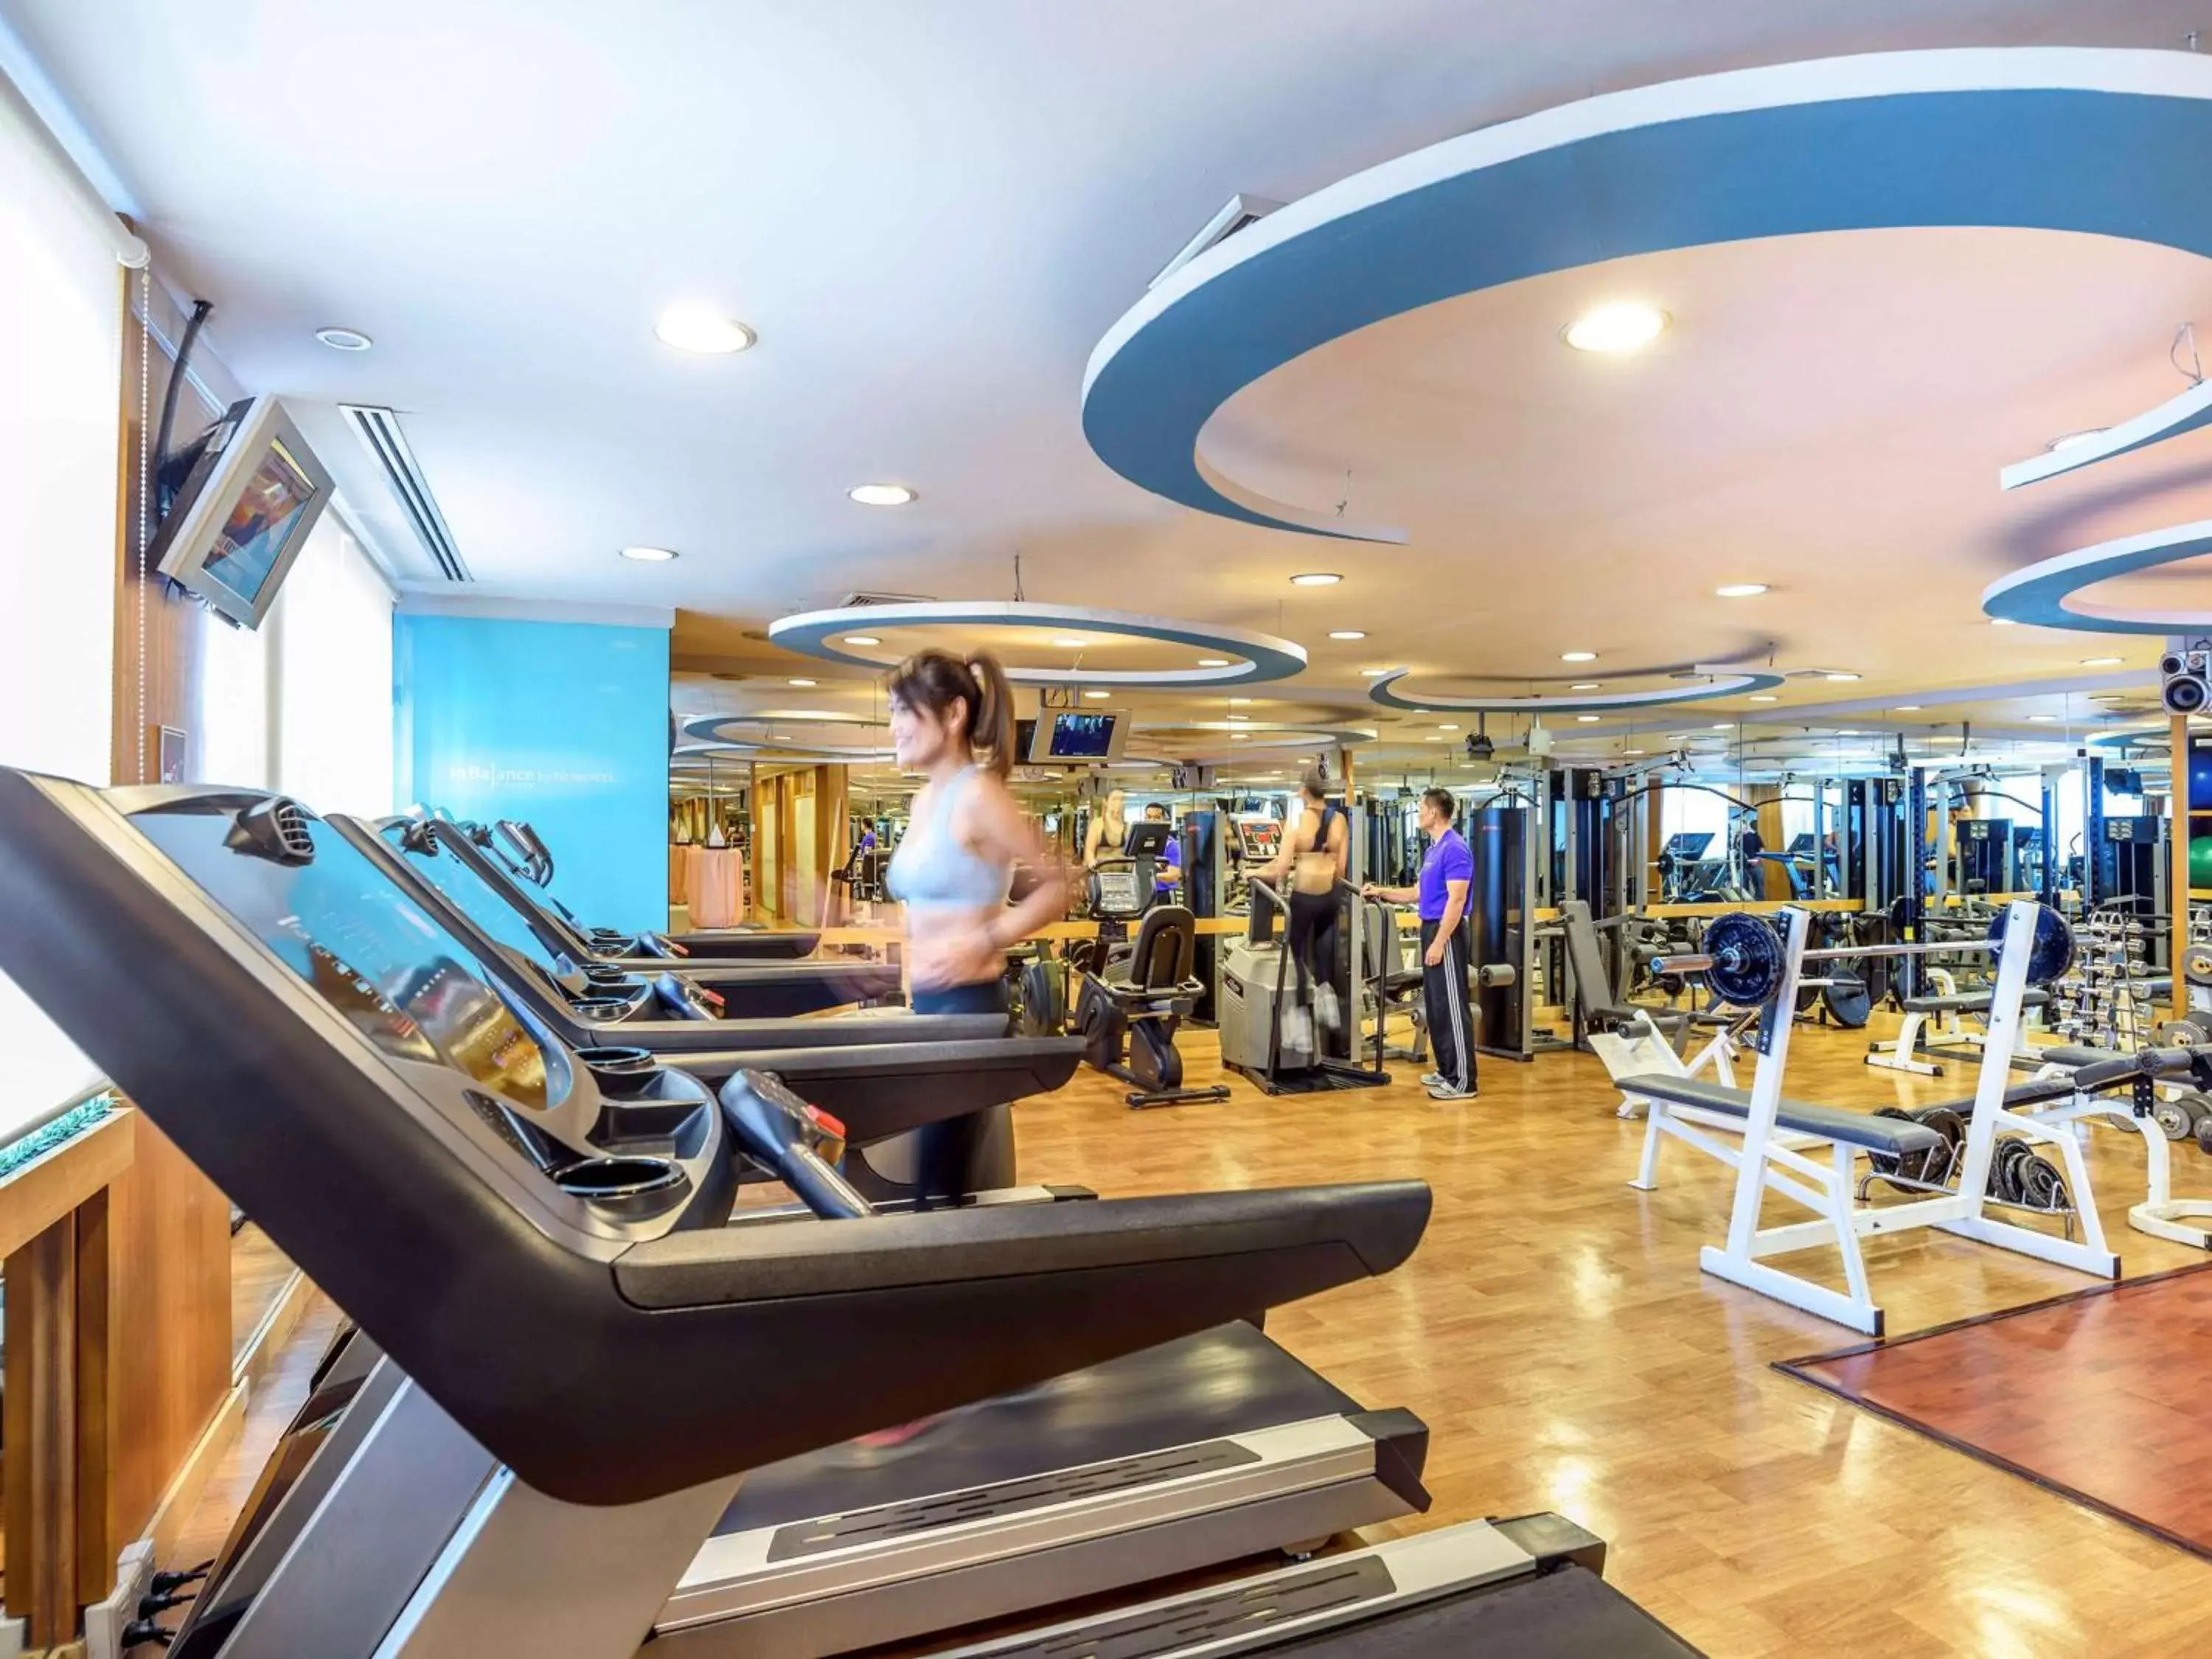 Fitness centre/facilities, Fitness Center/Facilities in Novotel Bangkok on Siam Square